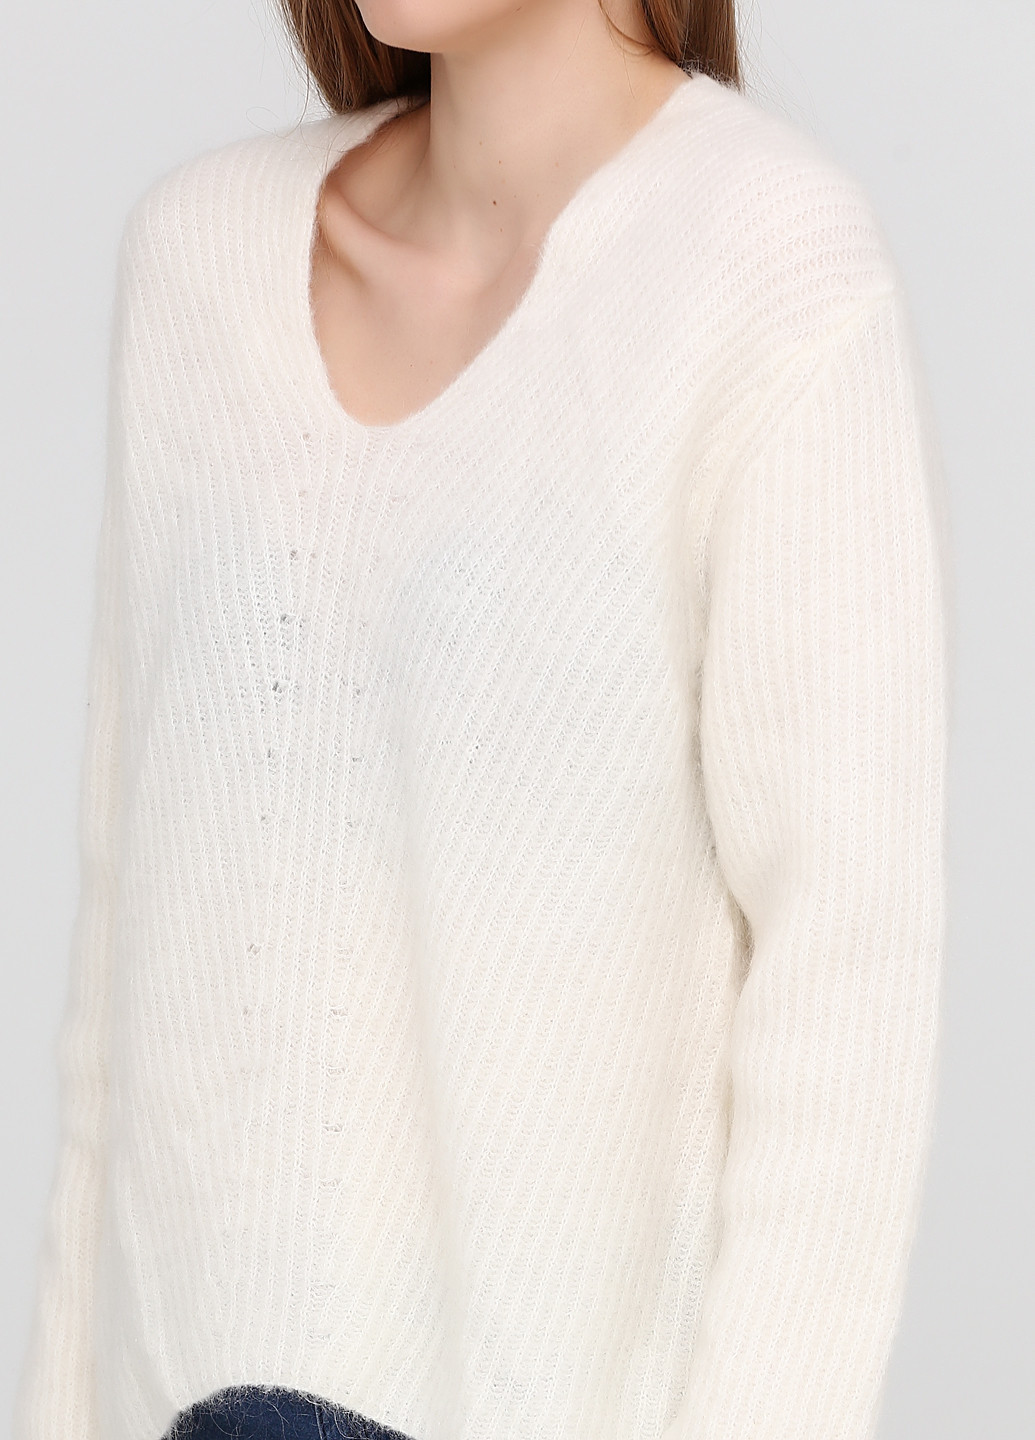 Айвори зимний пуловер пуловер Vero Moda